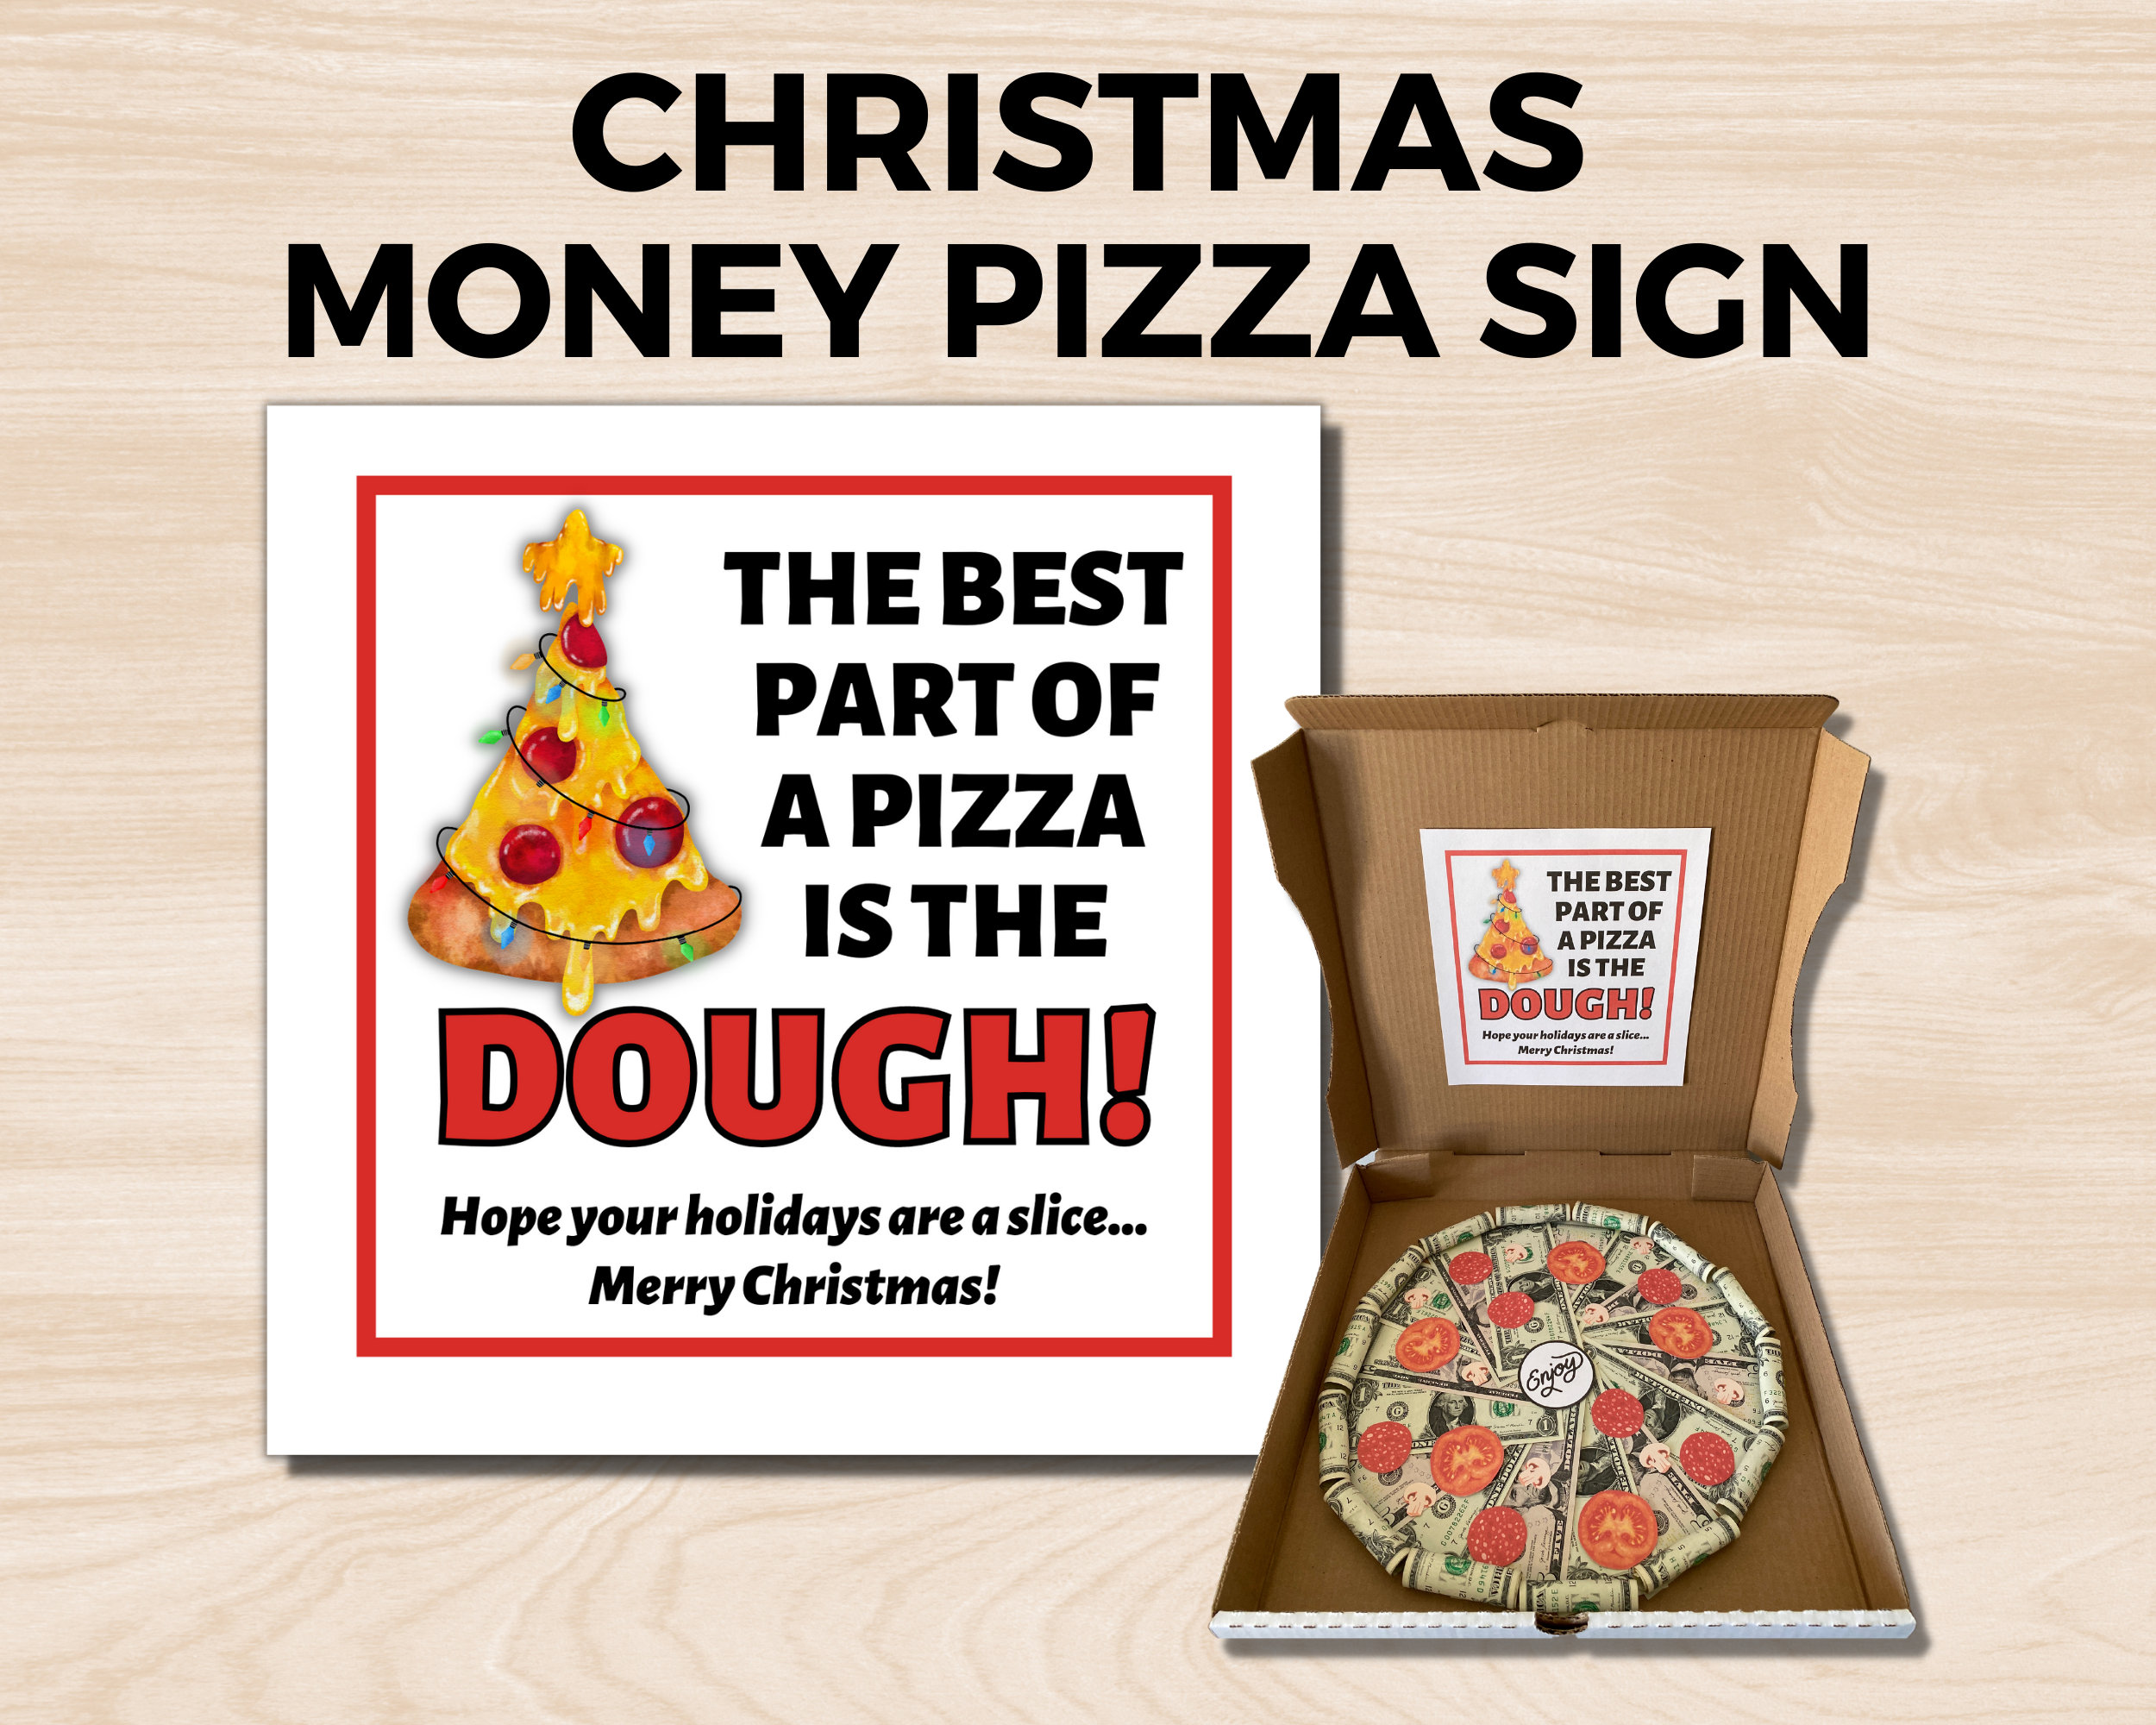 Creative money pizza!! Everyone can use a little dough